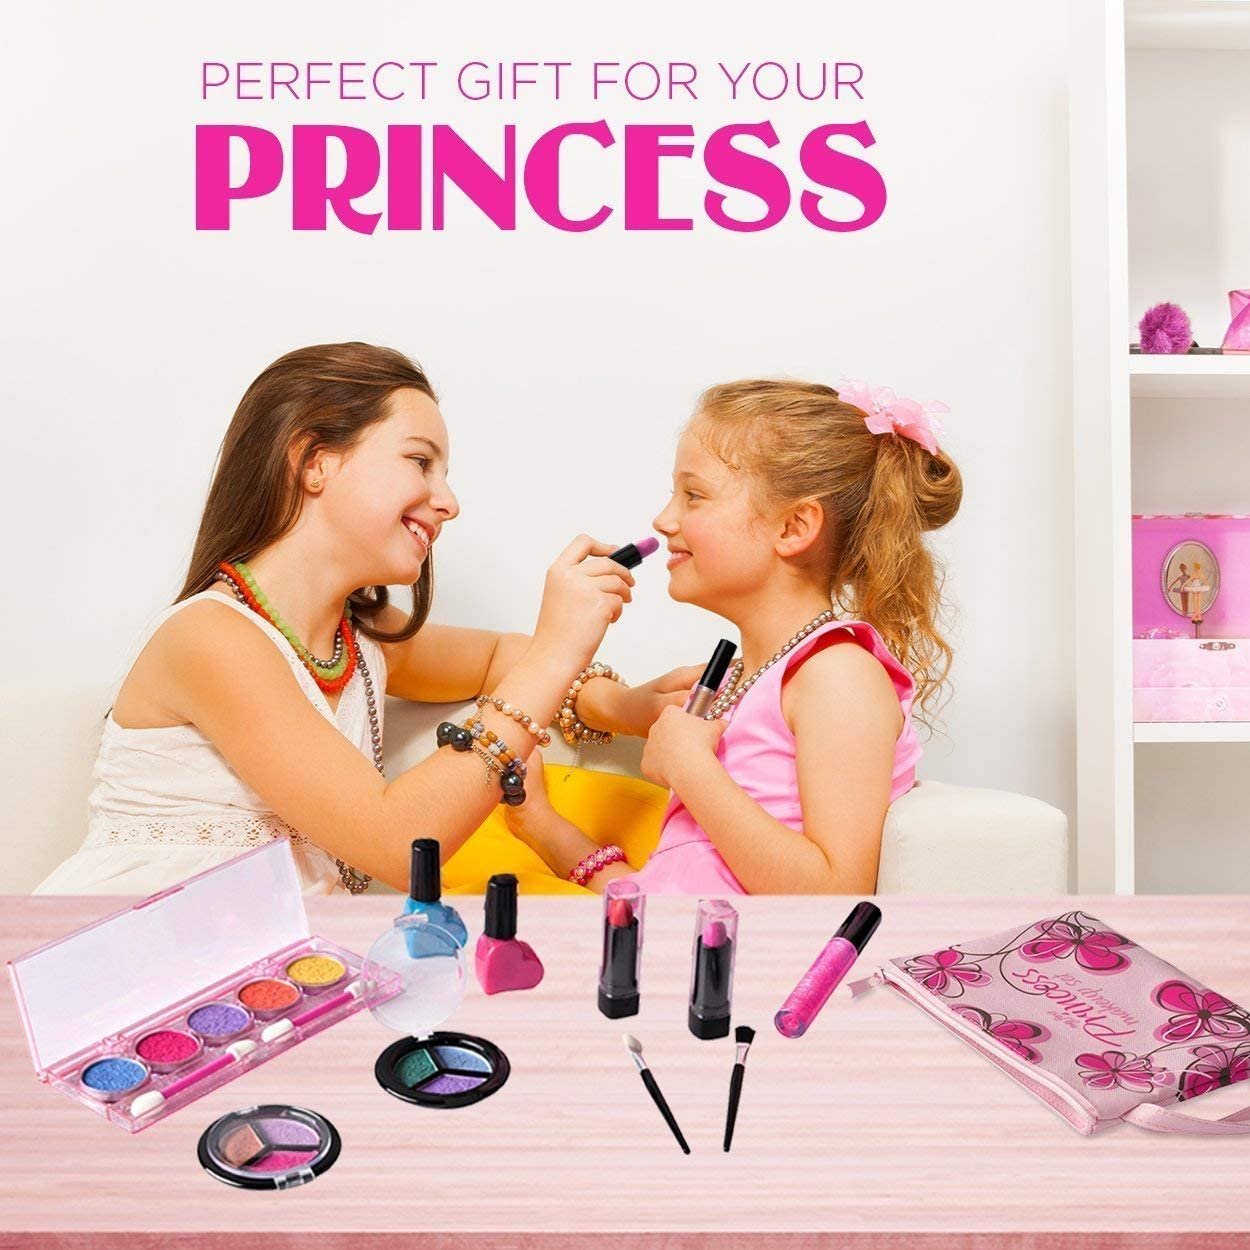 Playkidz Real Washable Play Make Up Set for Princess - Kids Makeup Kit for Girls Non Toxic - Full Makeup Dress Up Set with Bag. 11 PC - image 4 of 7